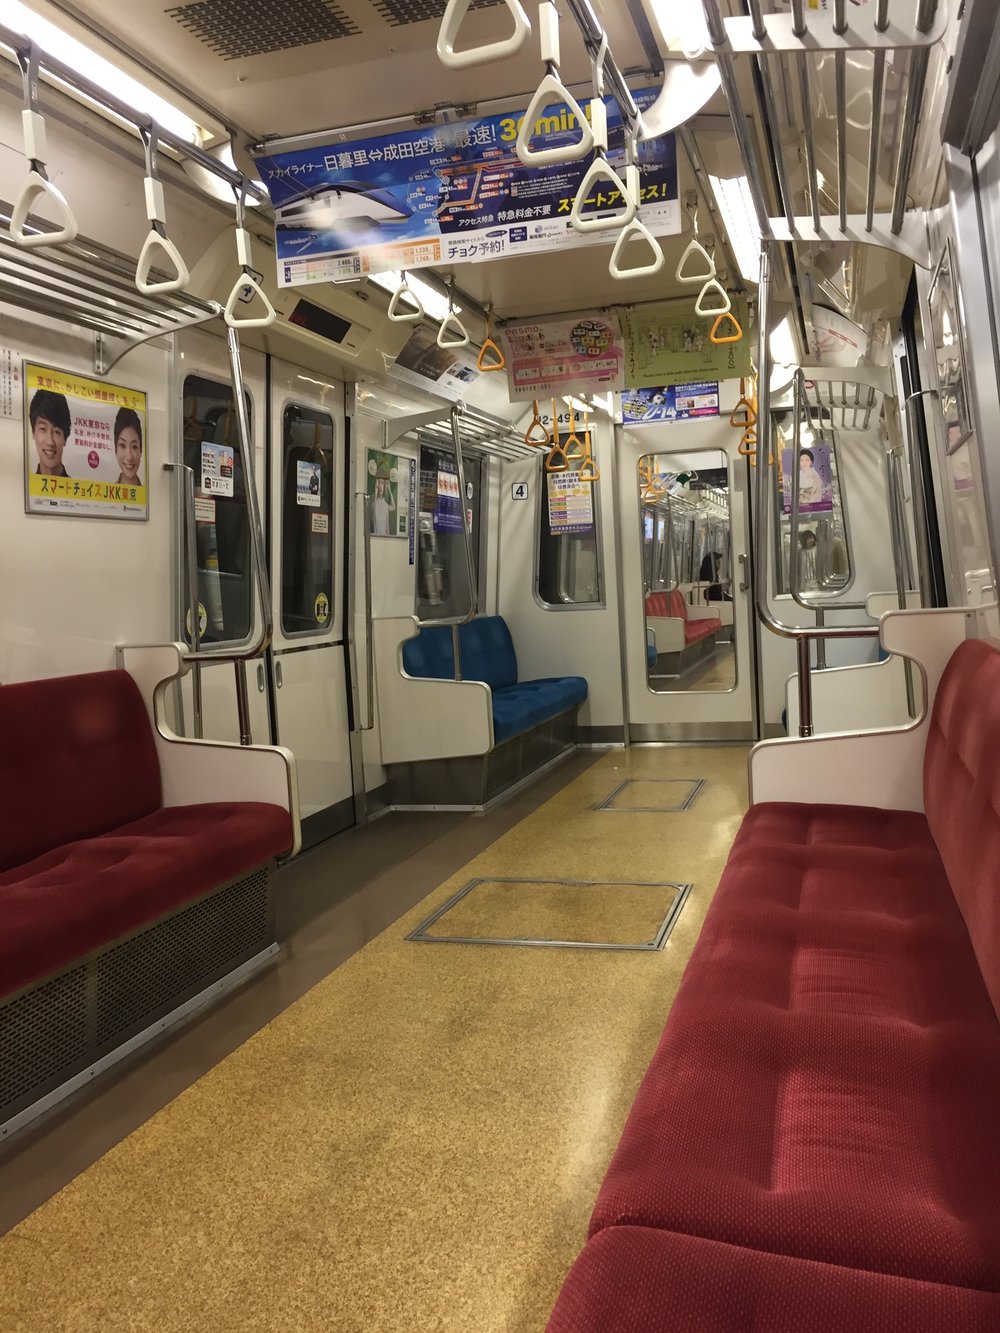 Japanese subway cart